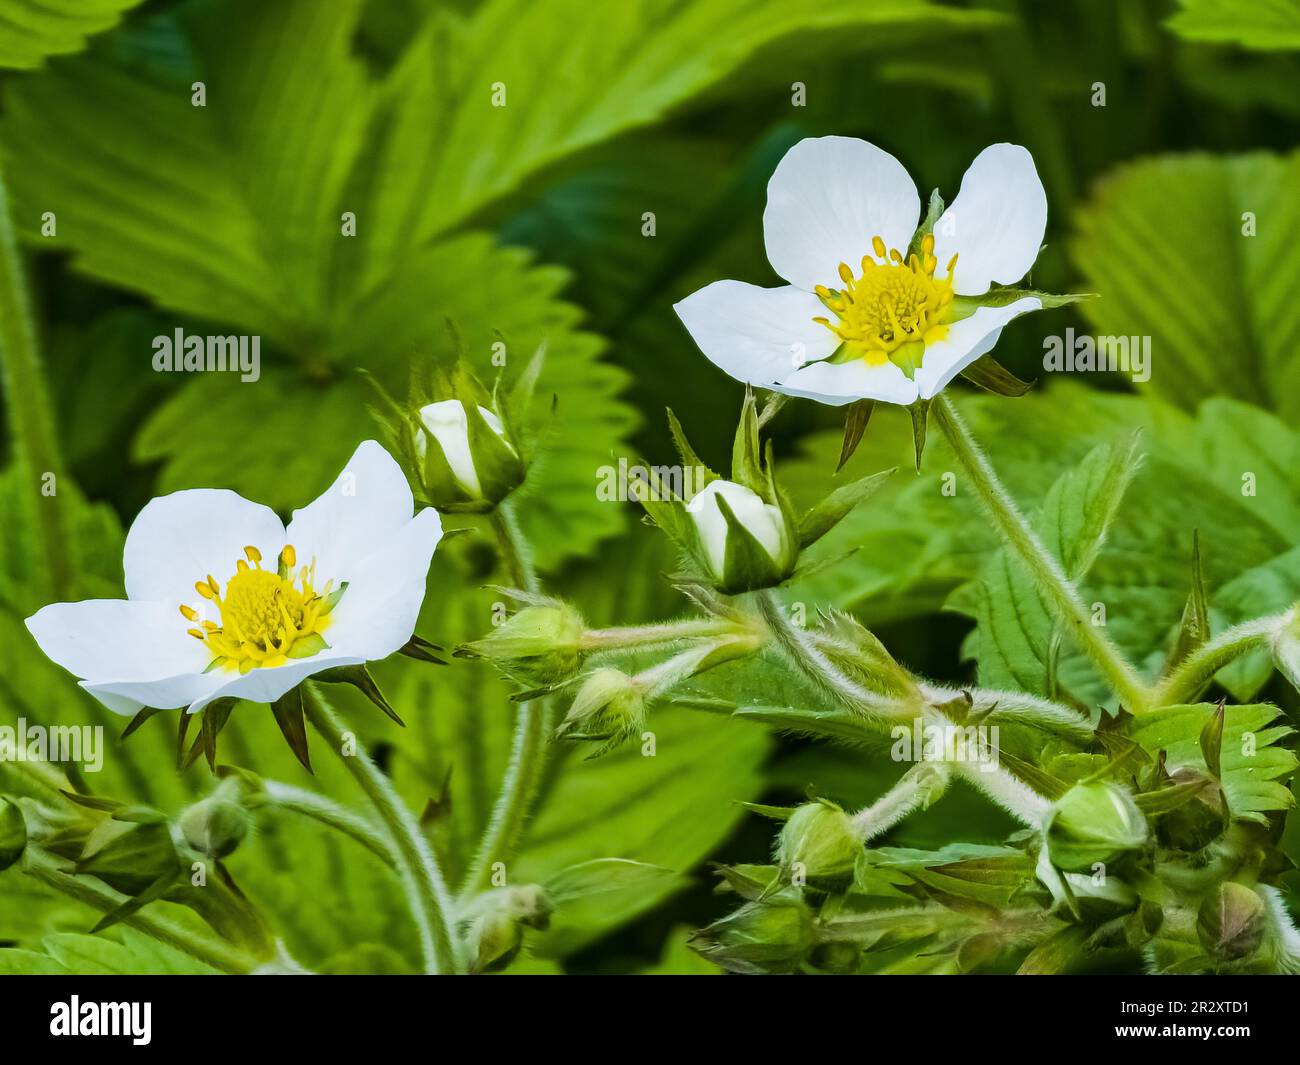 White flowers of wild strawberry in green grass. Latin name Fragaria L. Stock Photo